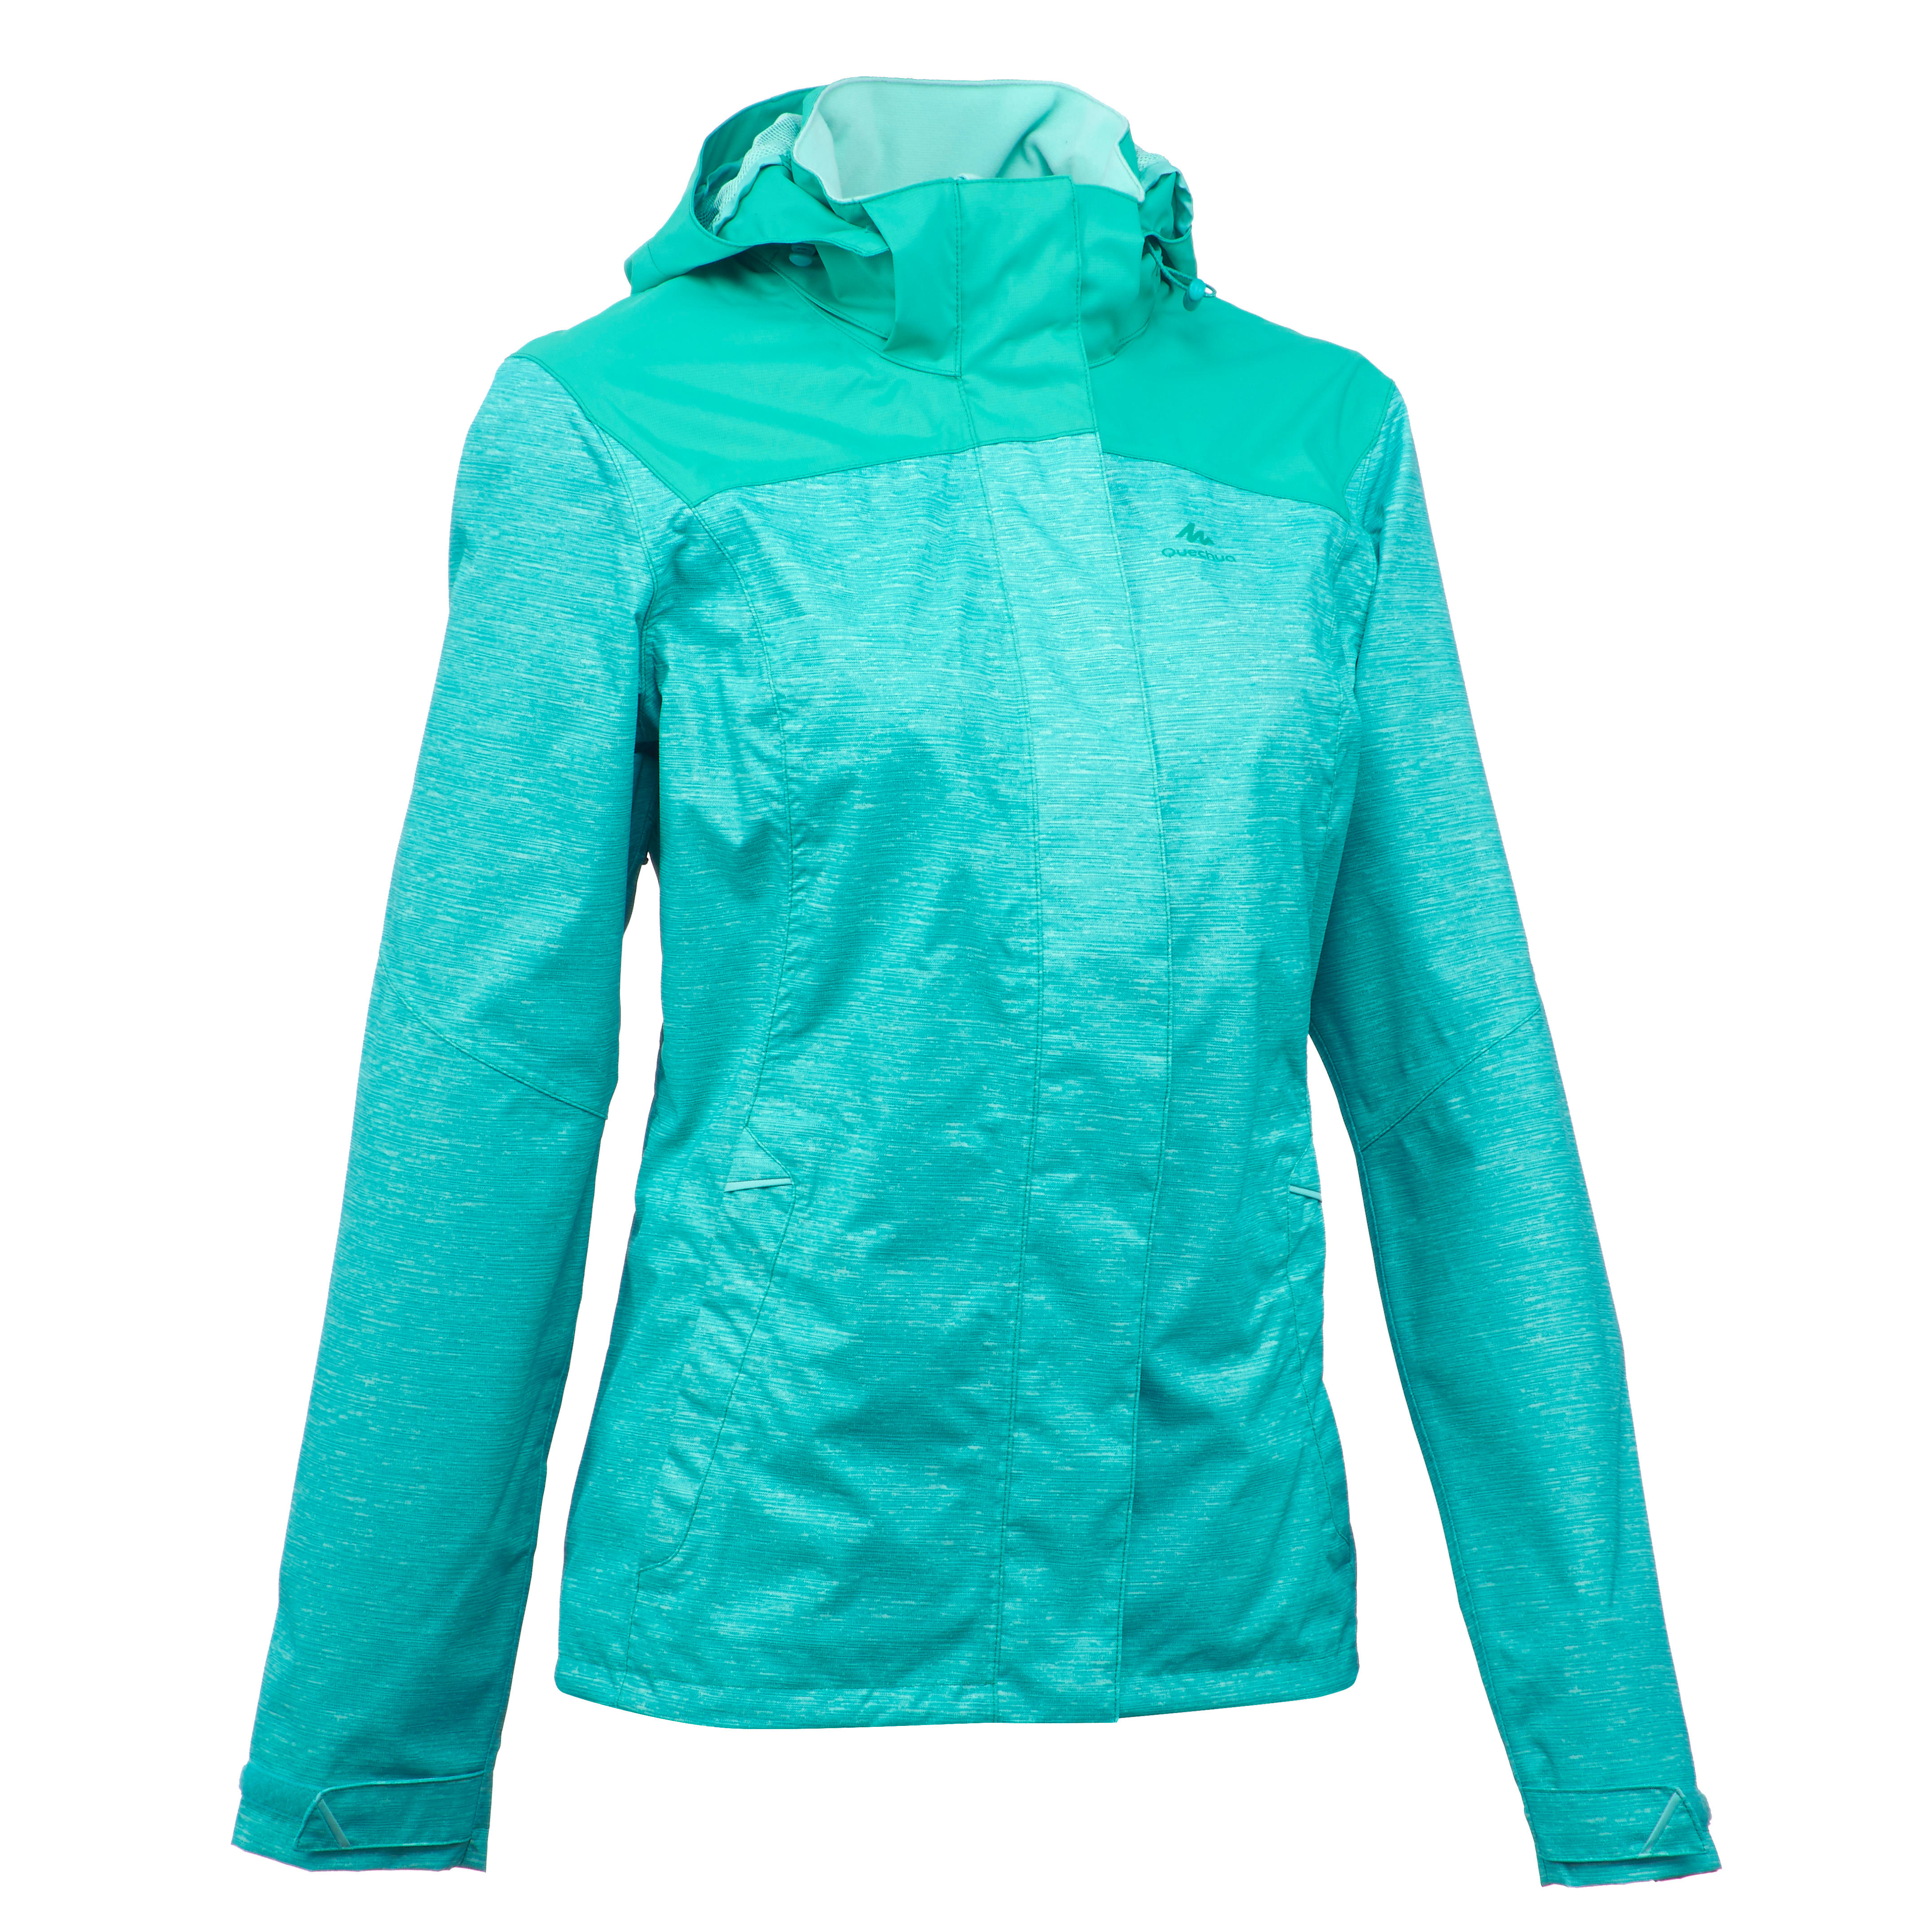 Raincoat for Women|Mountain Hiking Waterproof Rain Jacket|Decathlon